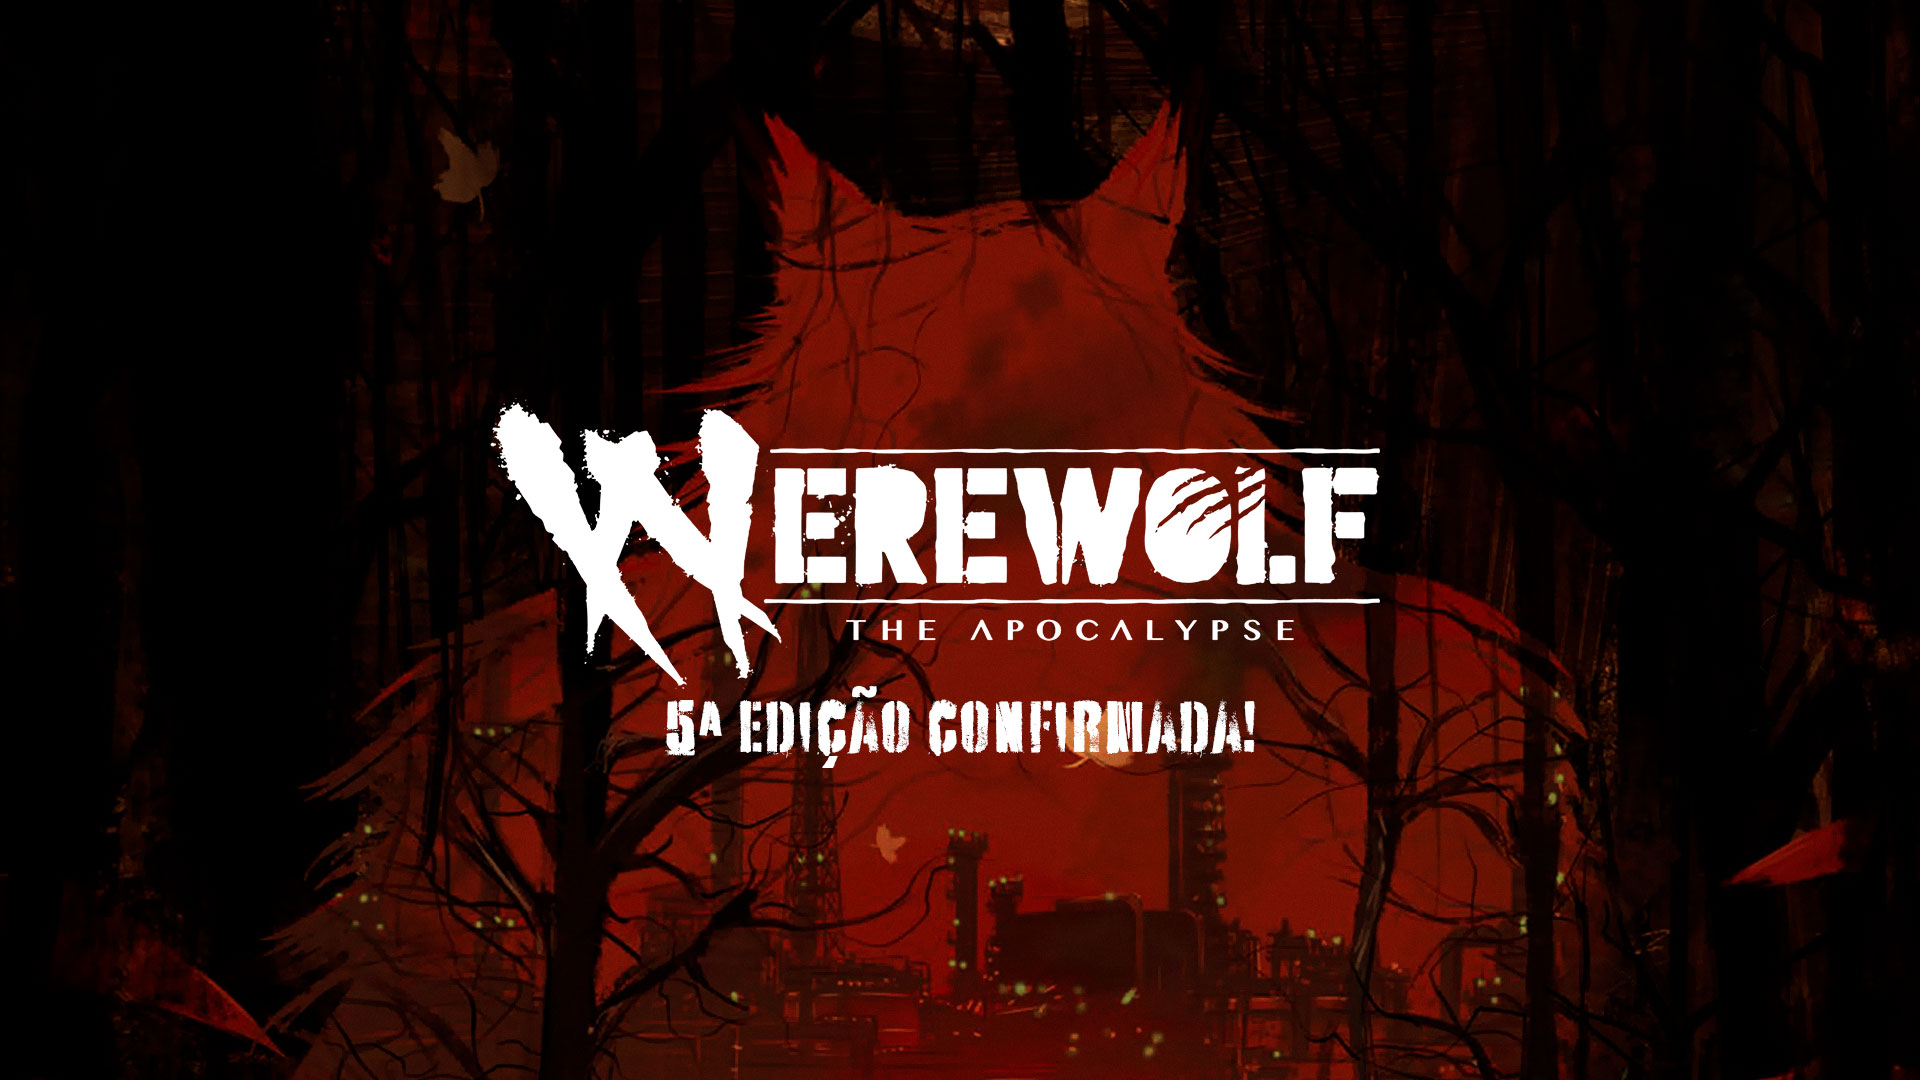 Werewolf: The Apocalypse 5th Edition Confirmado